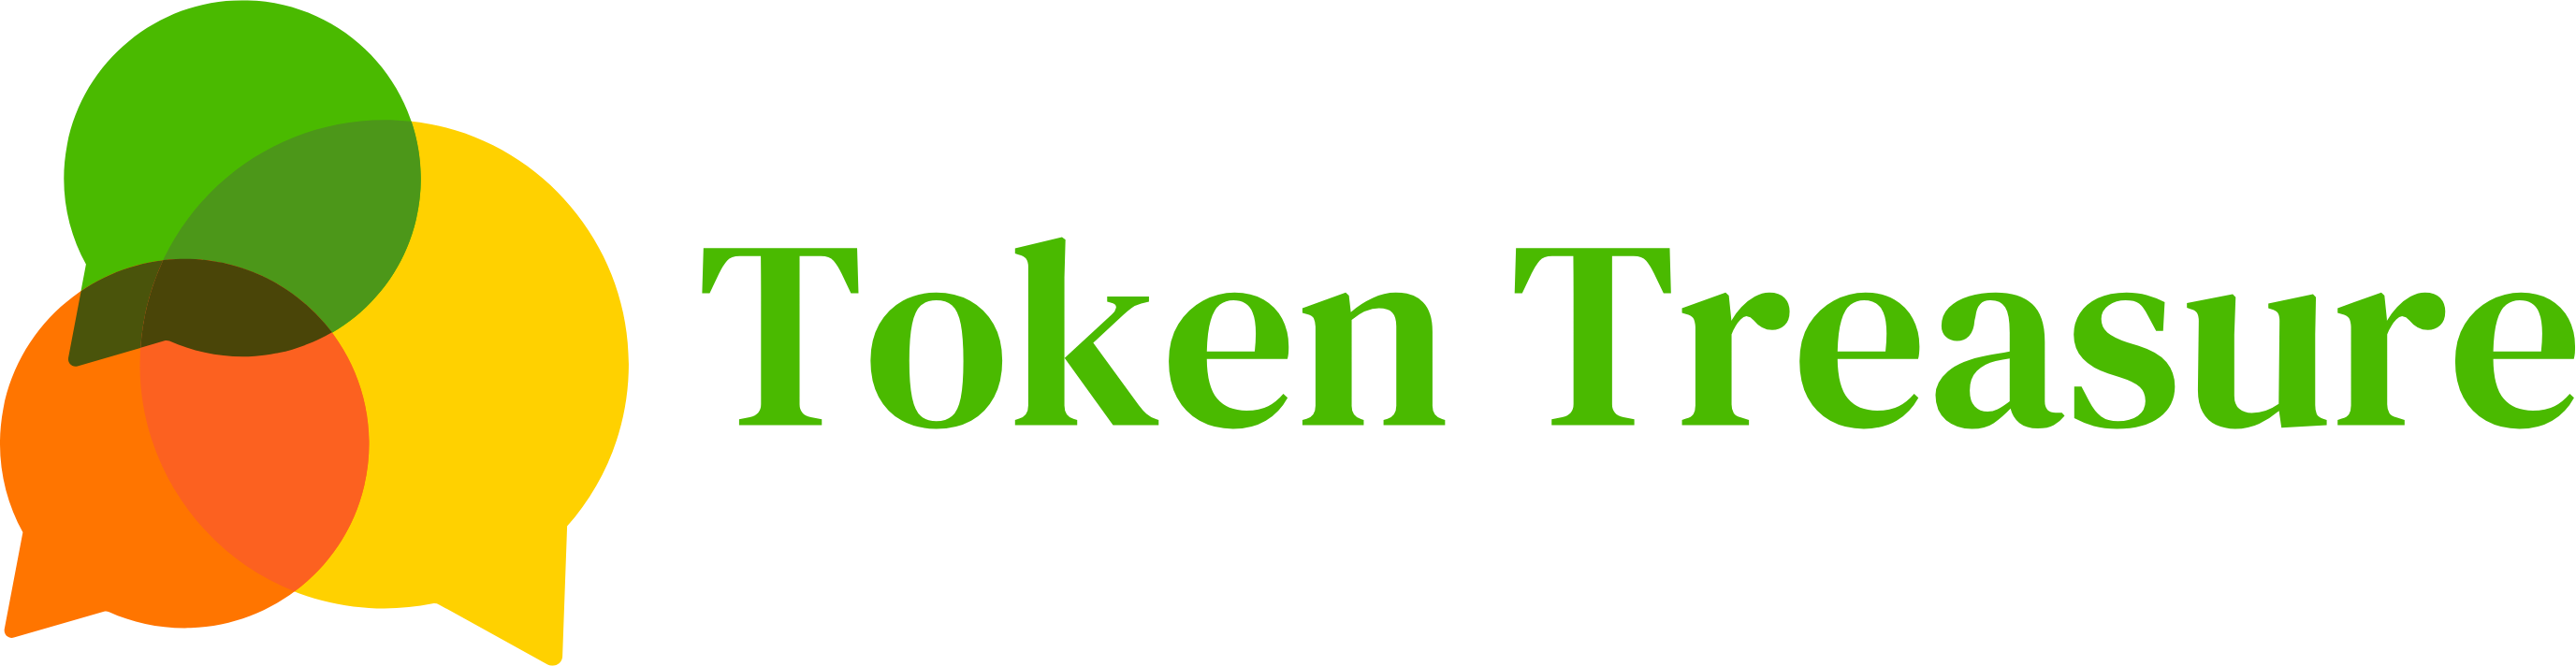 Token Treasure Logo, tokentreasure.net